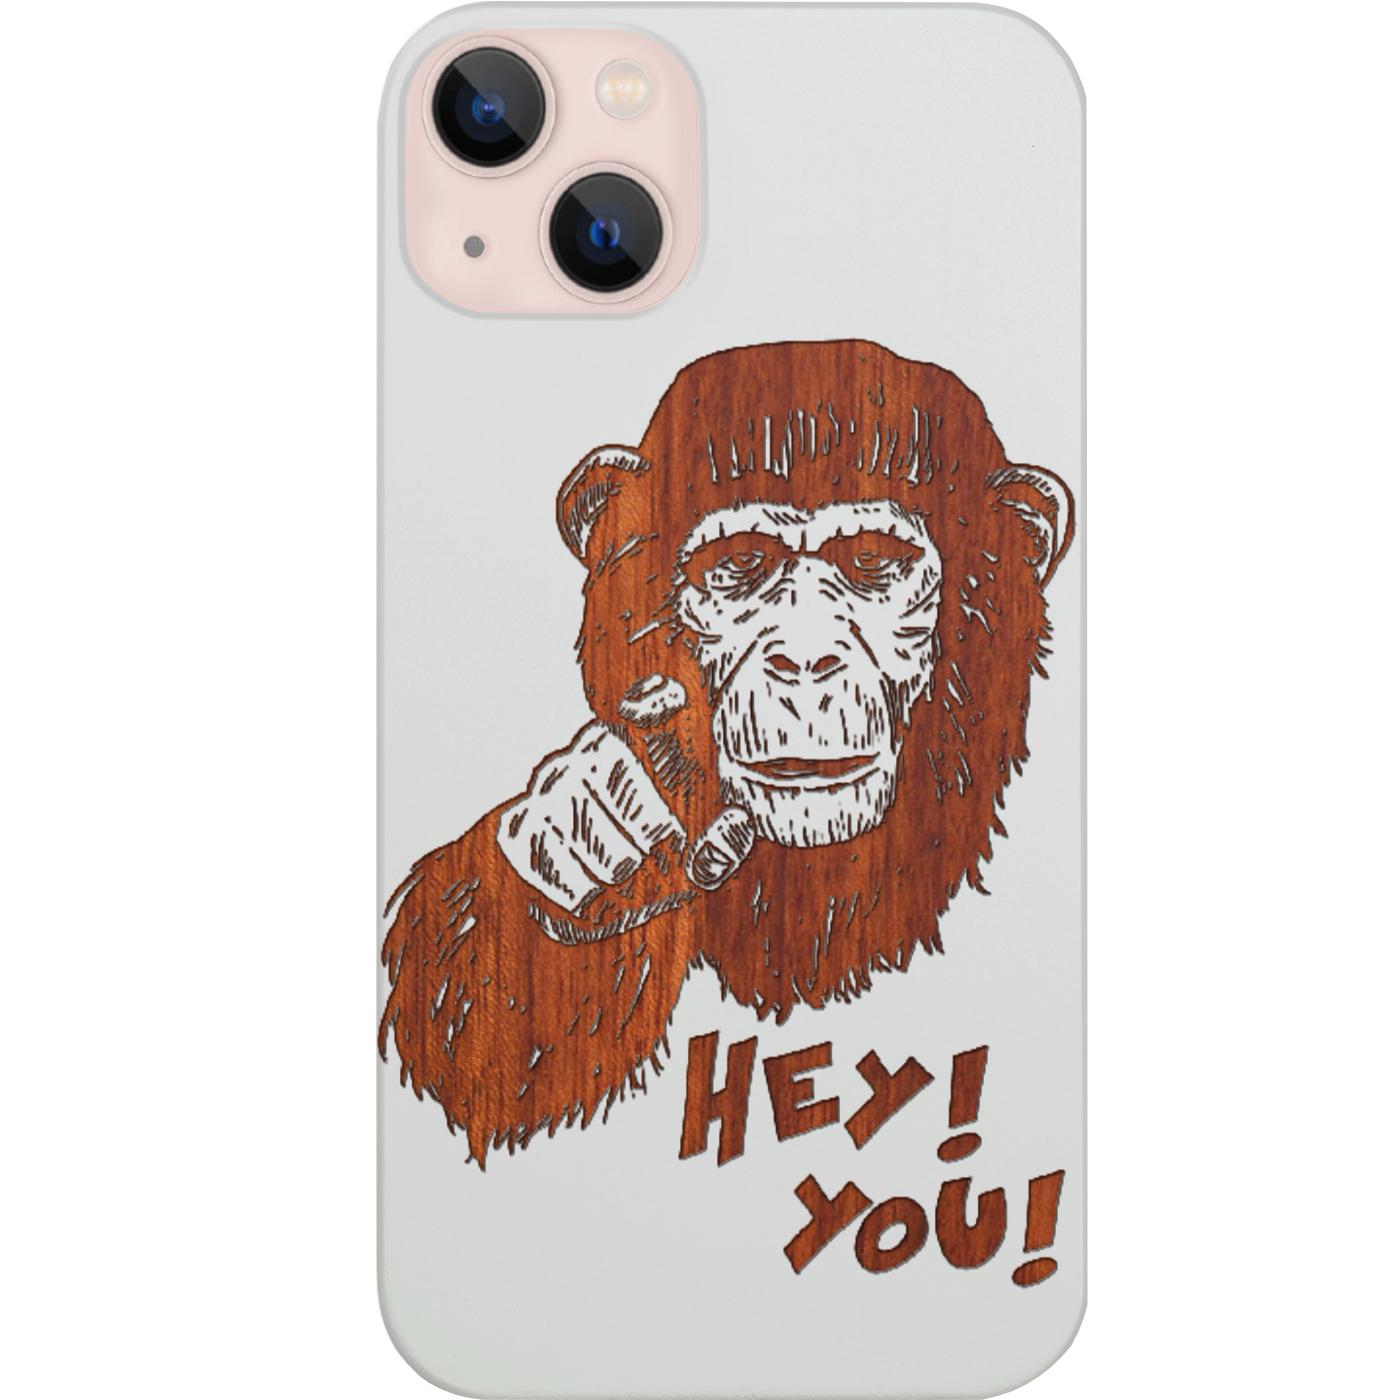 Gorilla Head - Engraved Phone Case